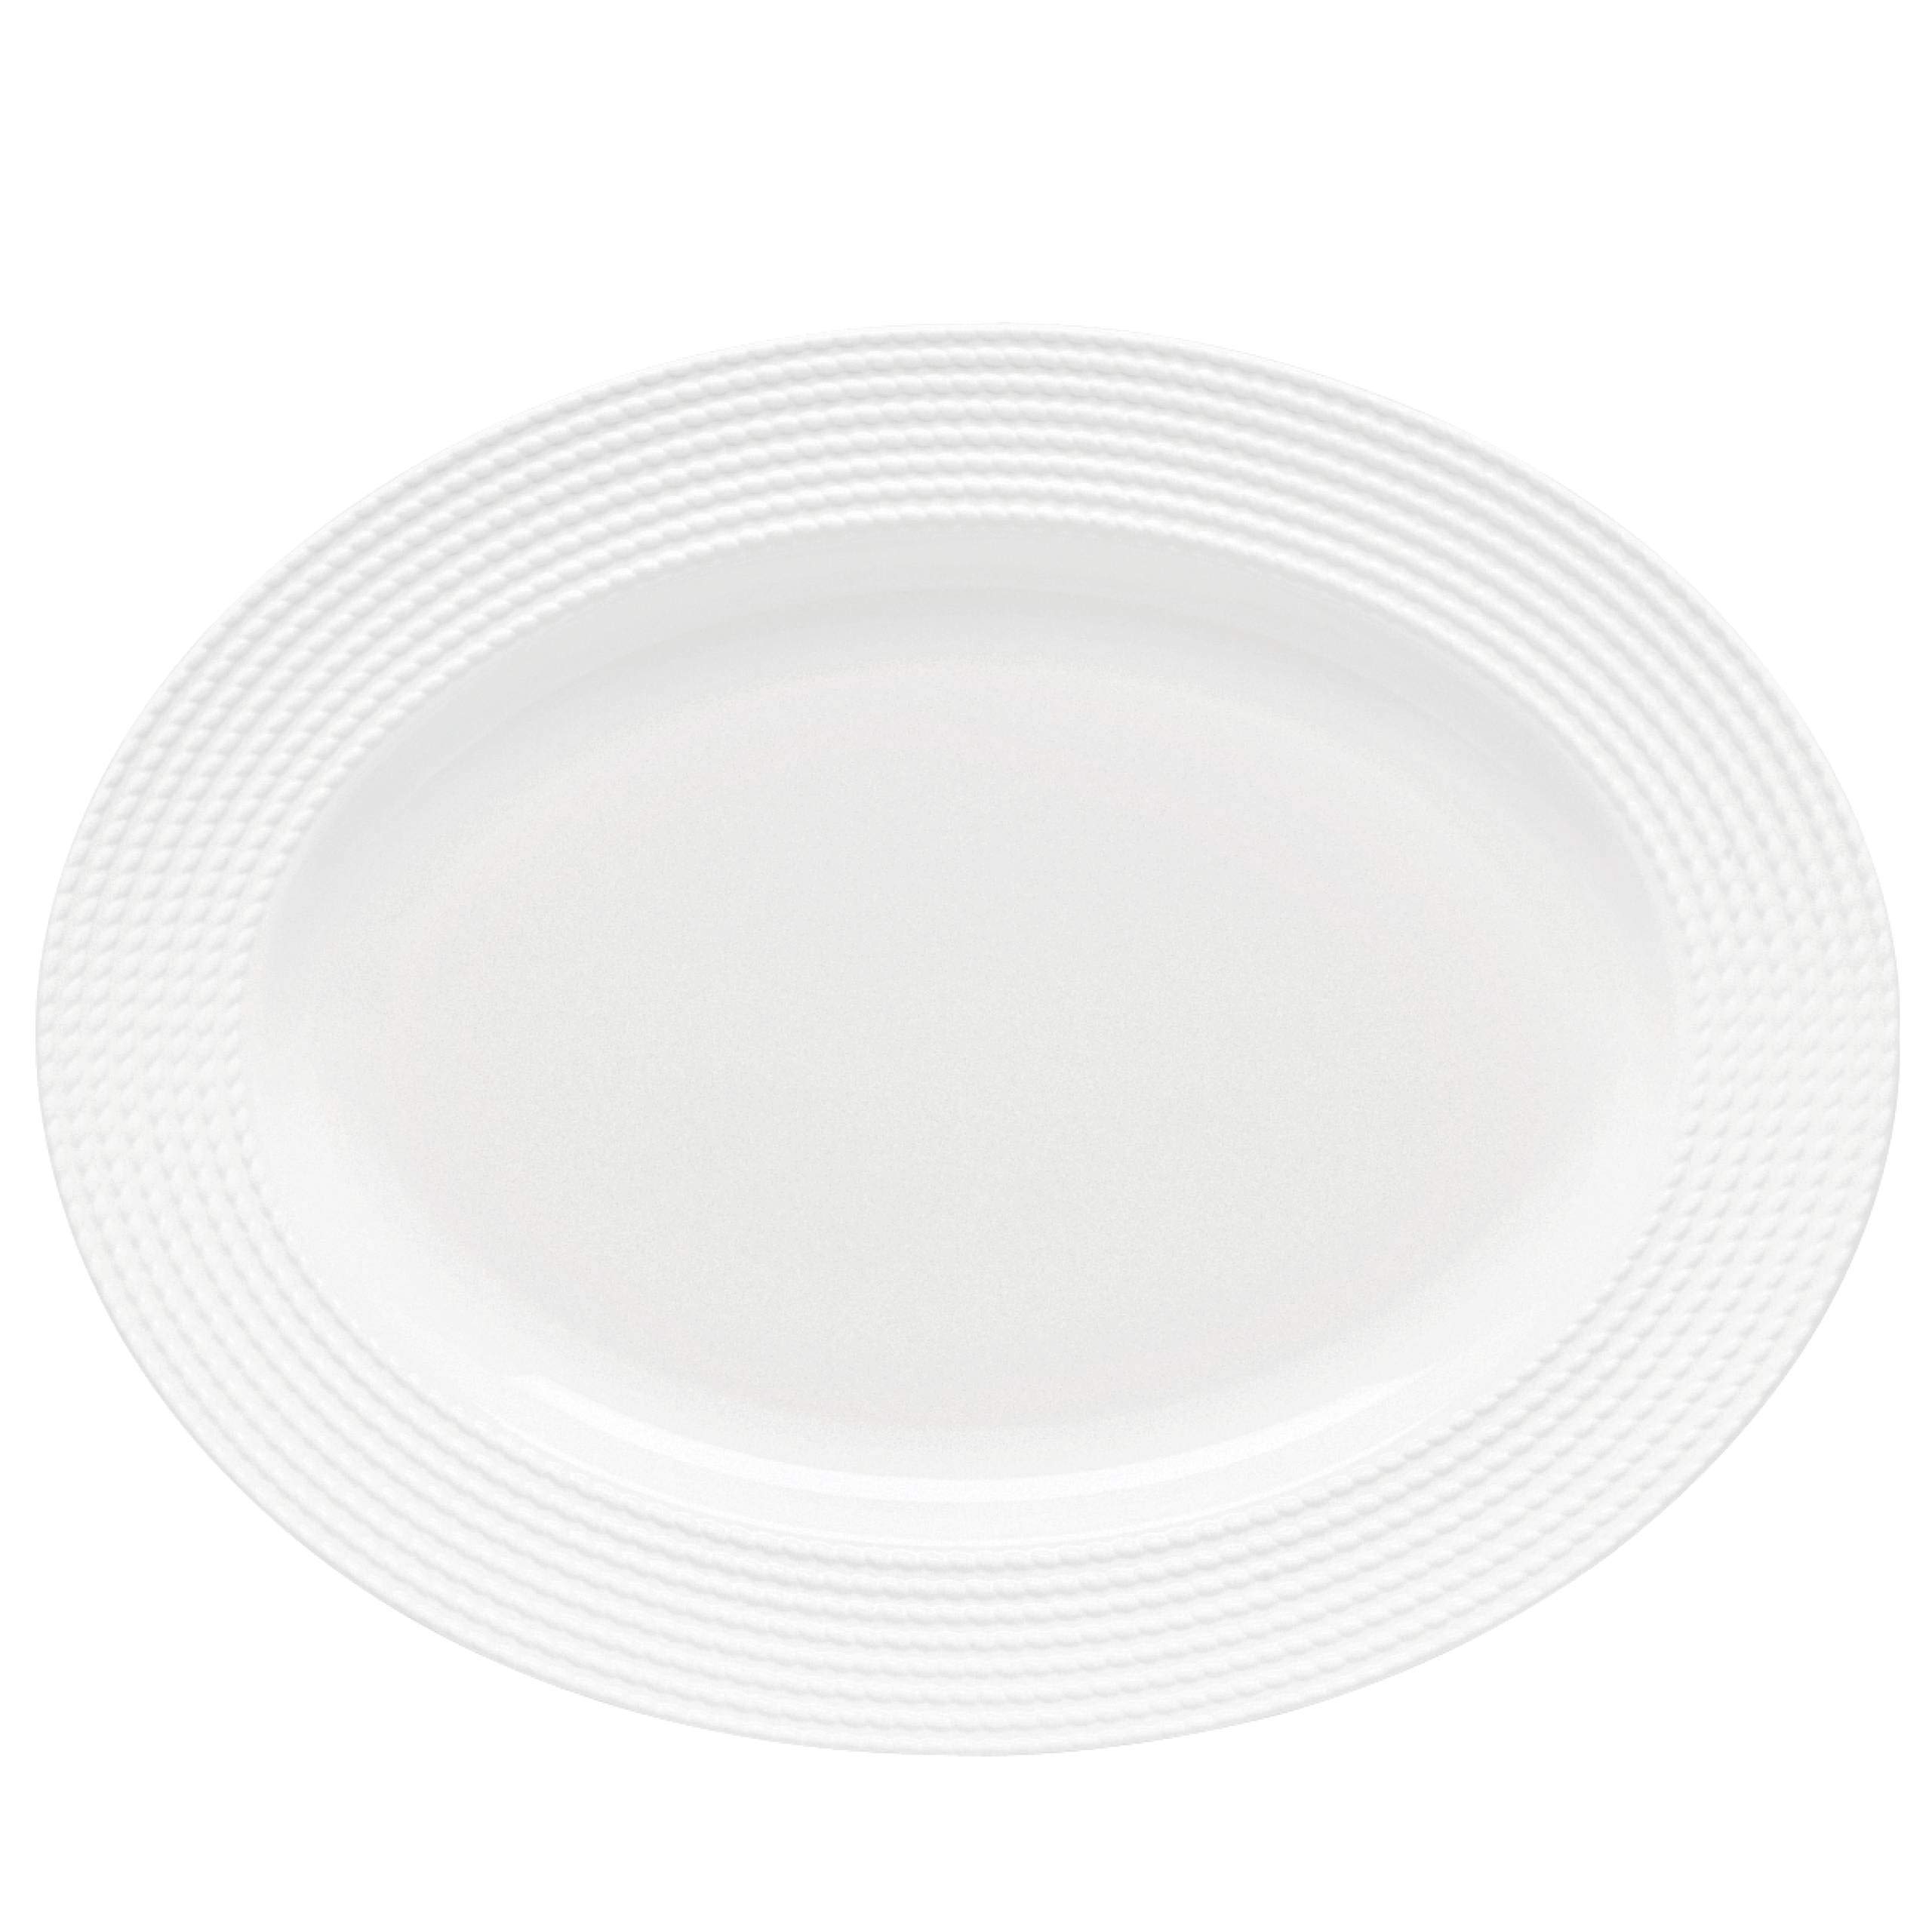 Kate Spade New York Wickford 16" Oval Serving Platter, 4.25 LB, White